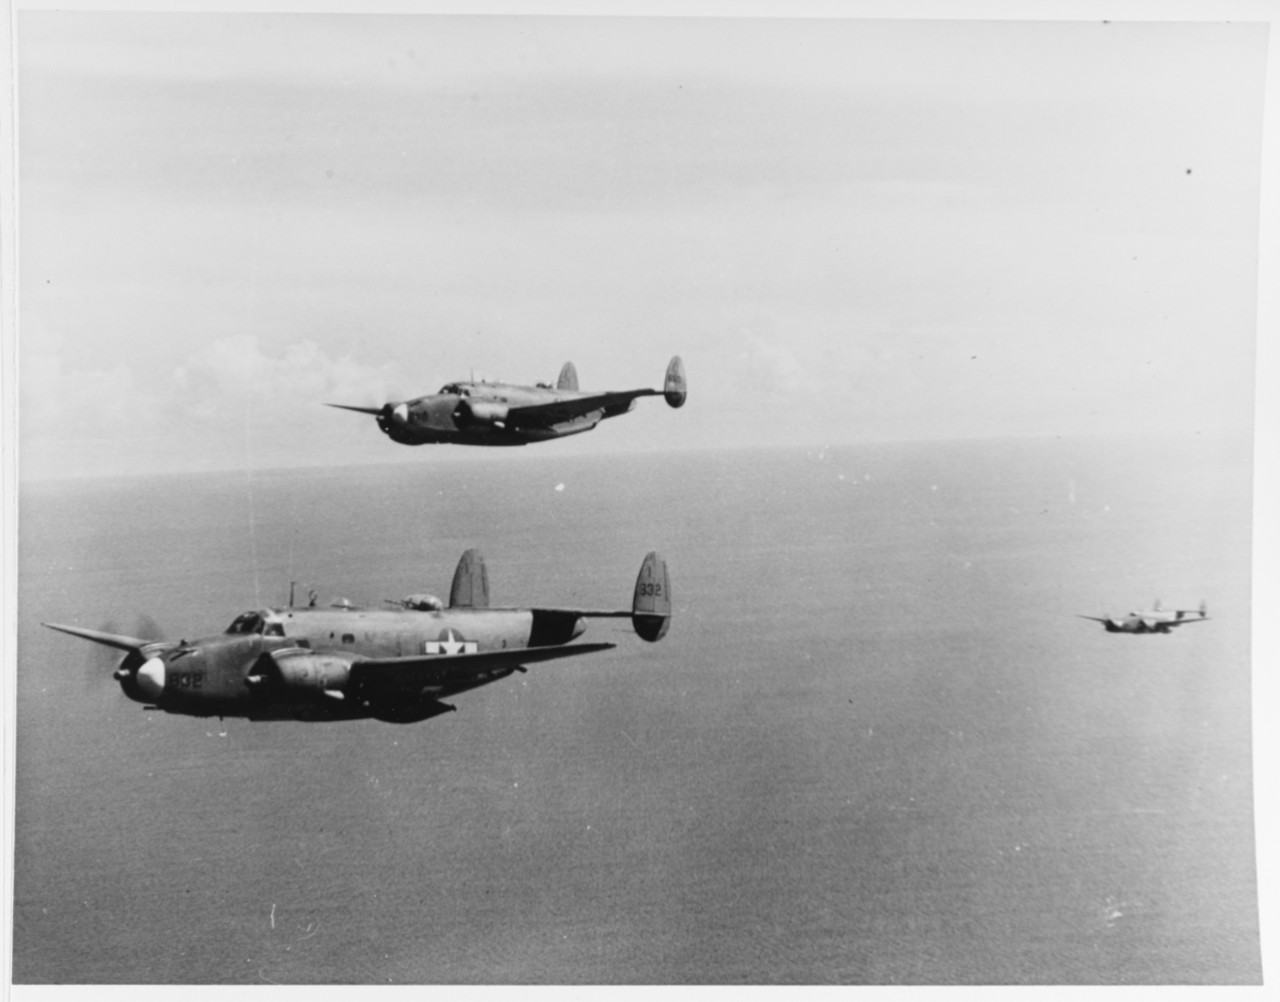 Lockheed PV-1 "Ventura" Patrol Bombers